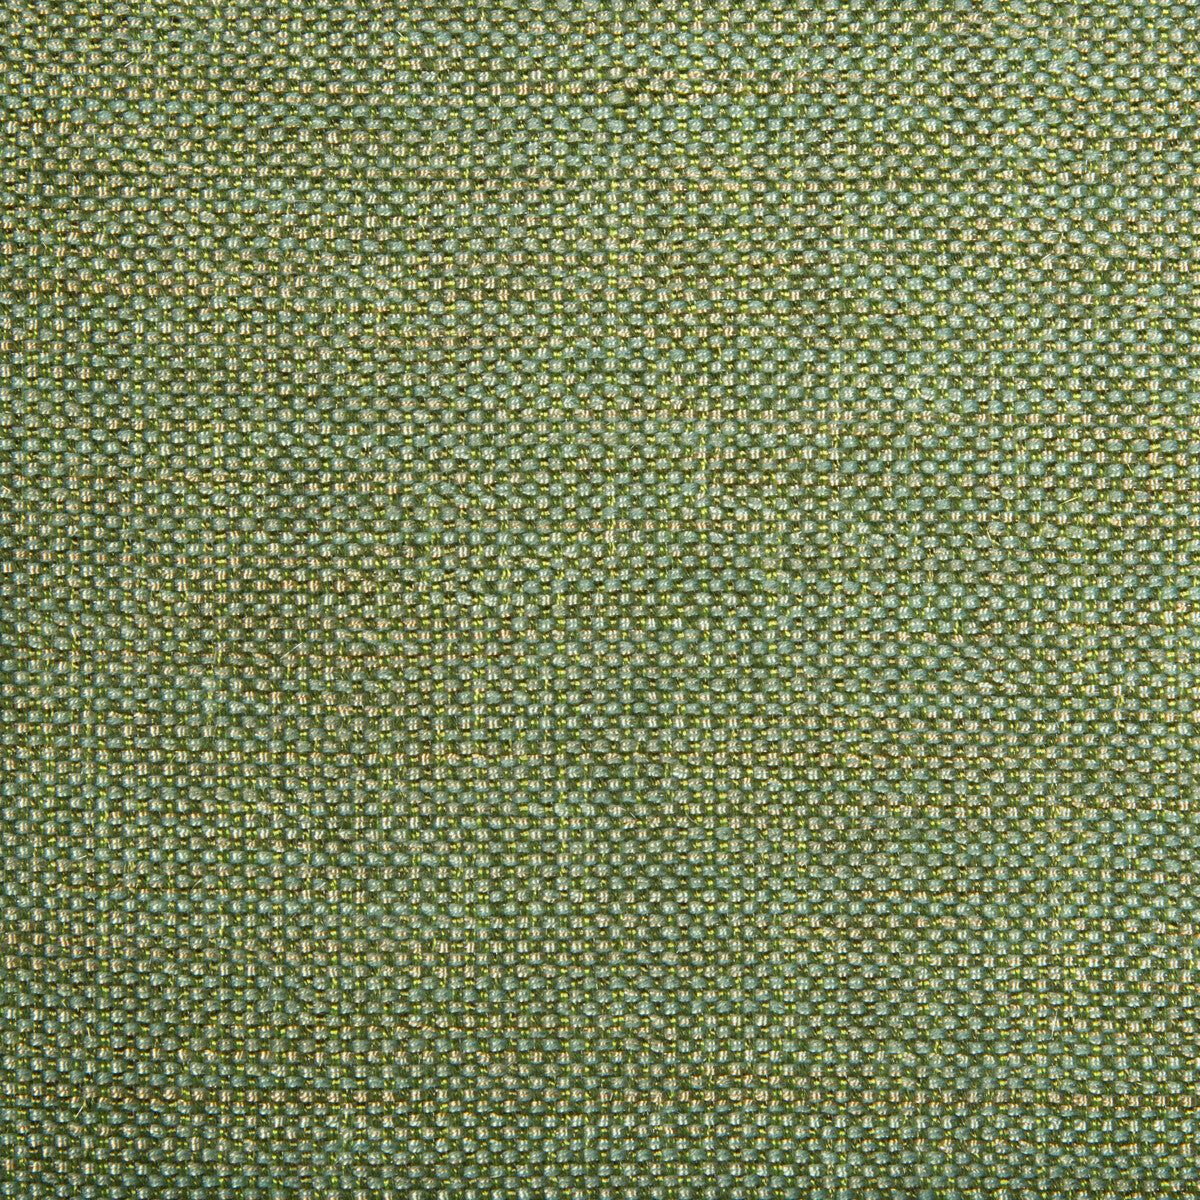 Kravet Smart fabric in 34939-3 color - pattern 34939.3.0 - by Kravet Smart